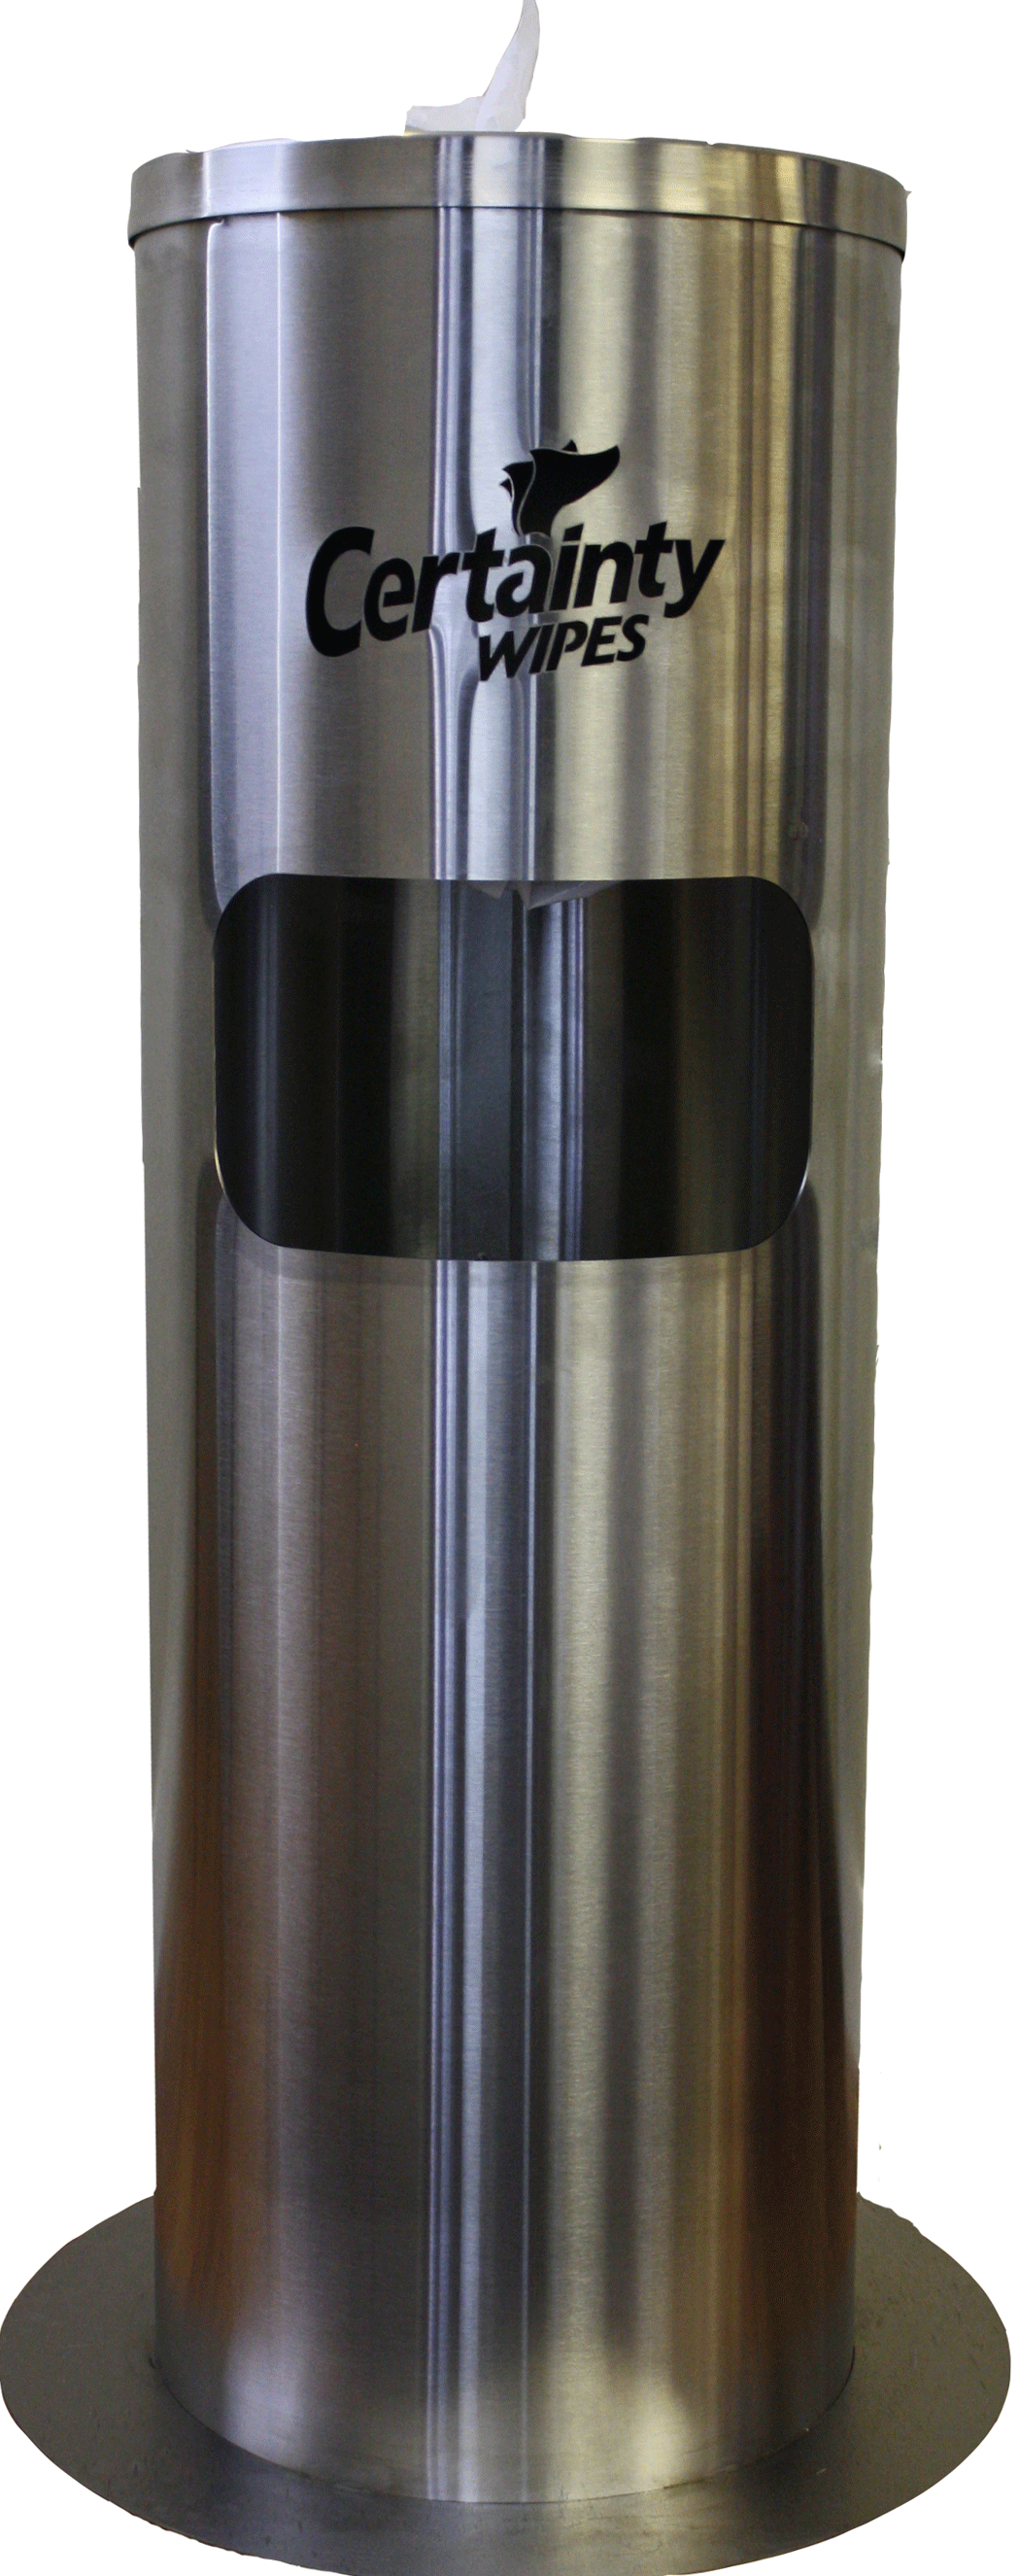 Certainty™ Wipes Dispenser & Waste Bin, Stainless Steel, Floor Stand